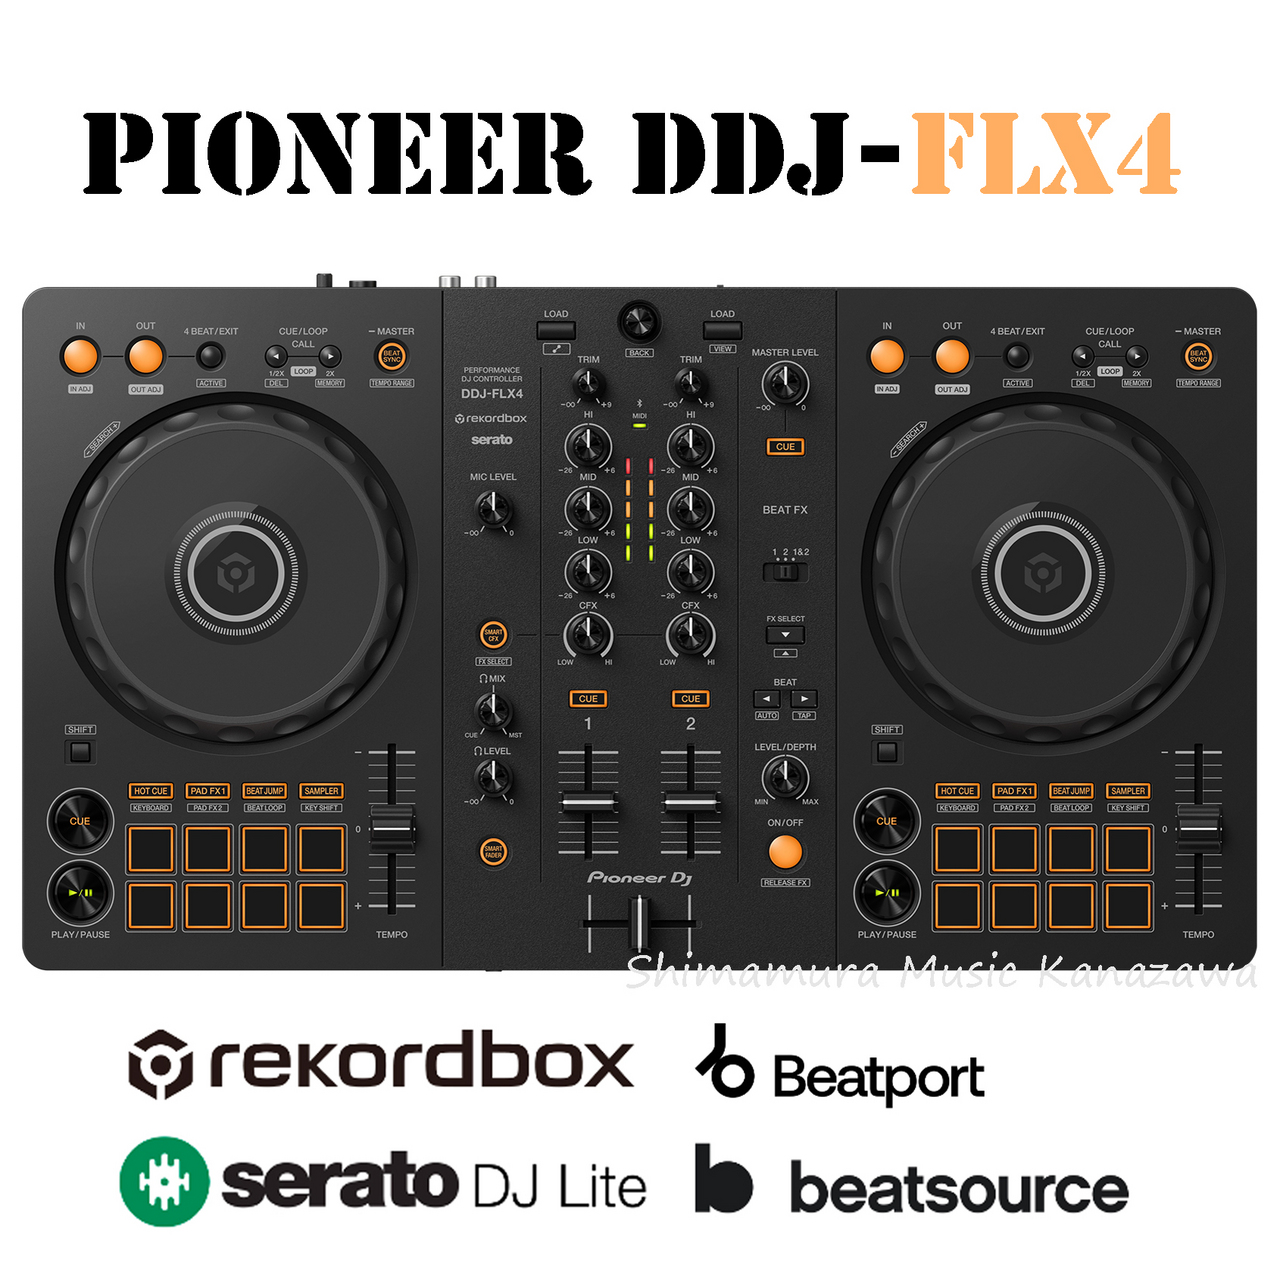 PioneerDJ DDJ-FLX4 マルチアプリ対応2ch DJコントローラー (Black)